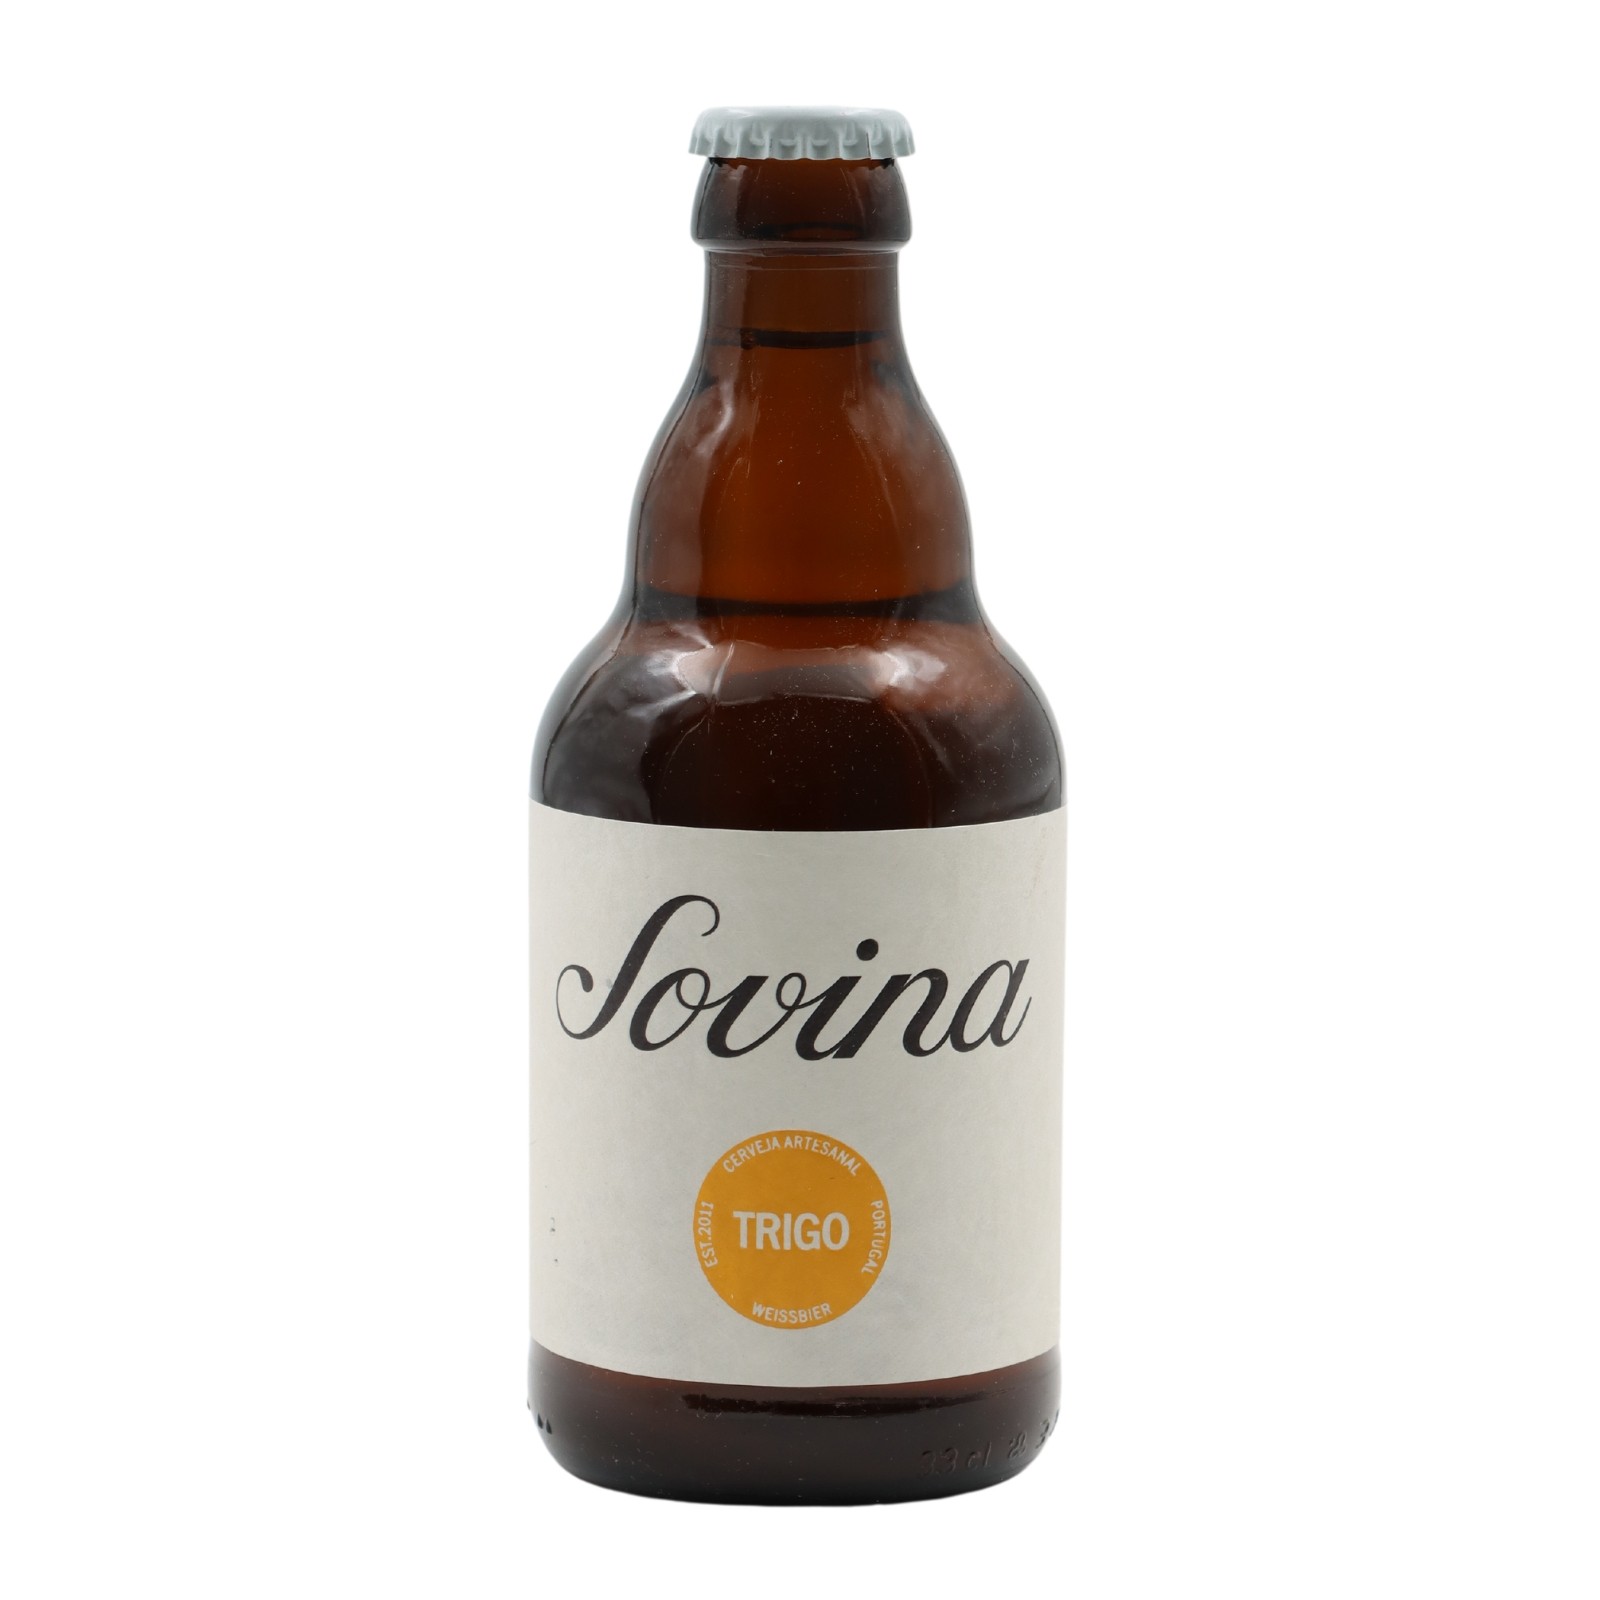 Sovina Trigo Weiss Beer